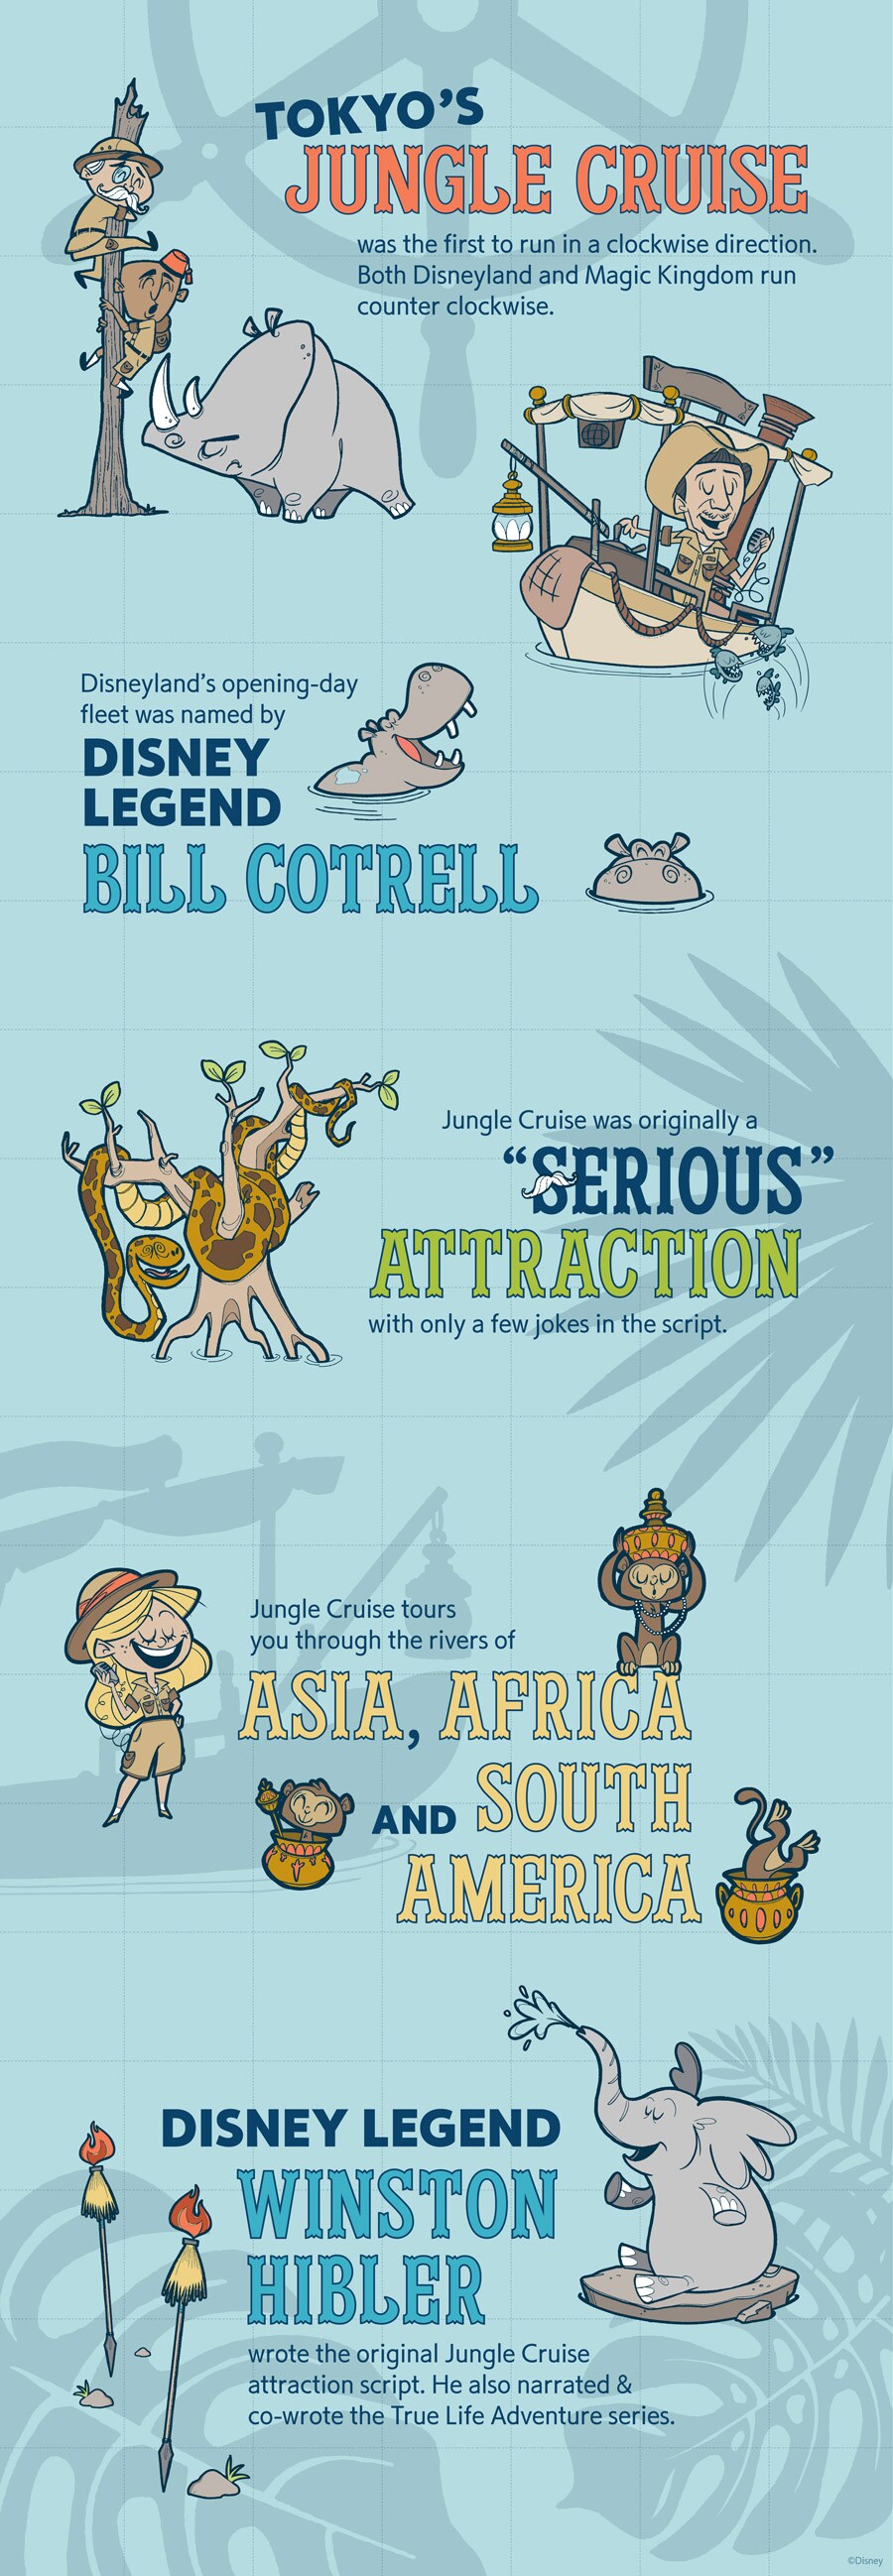 5 Jungle Cruise Fun Facts